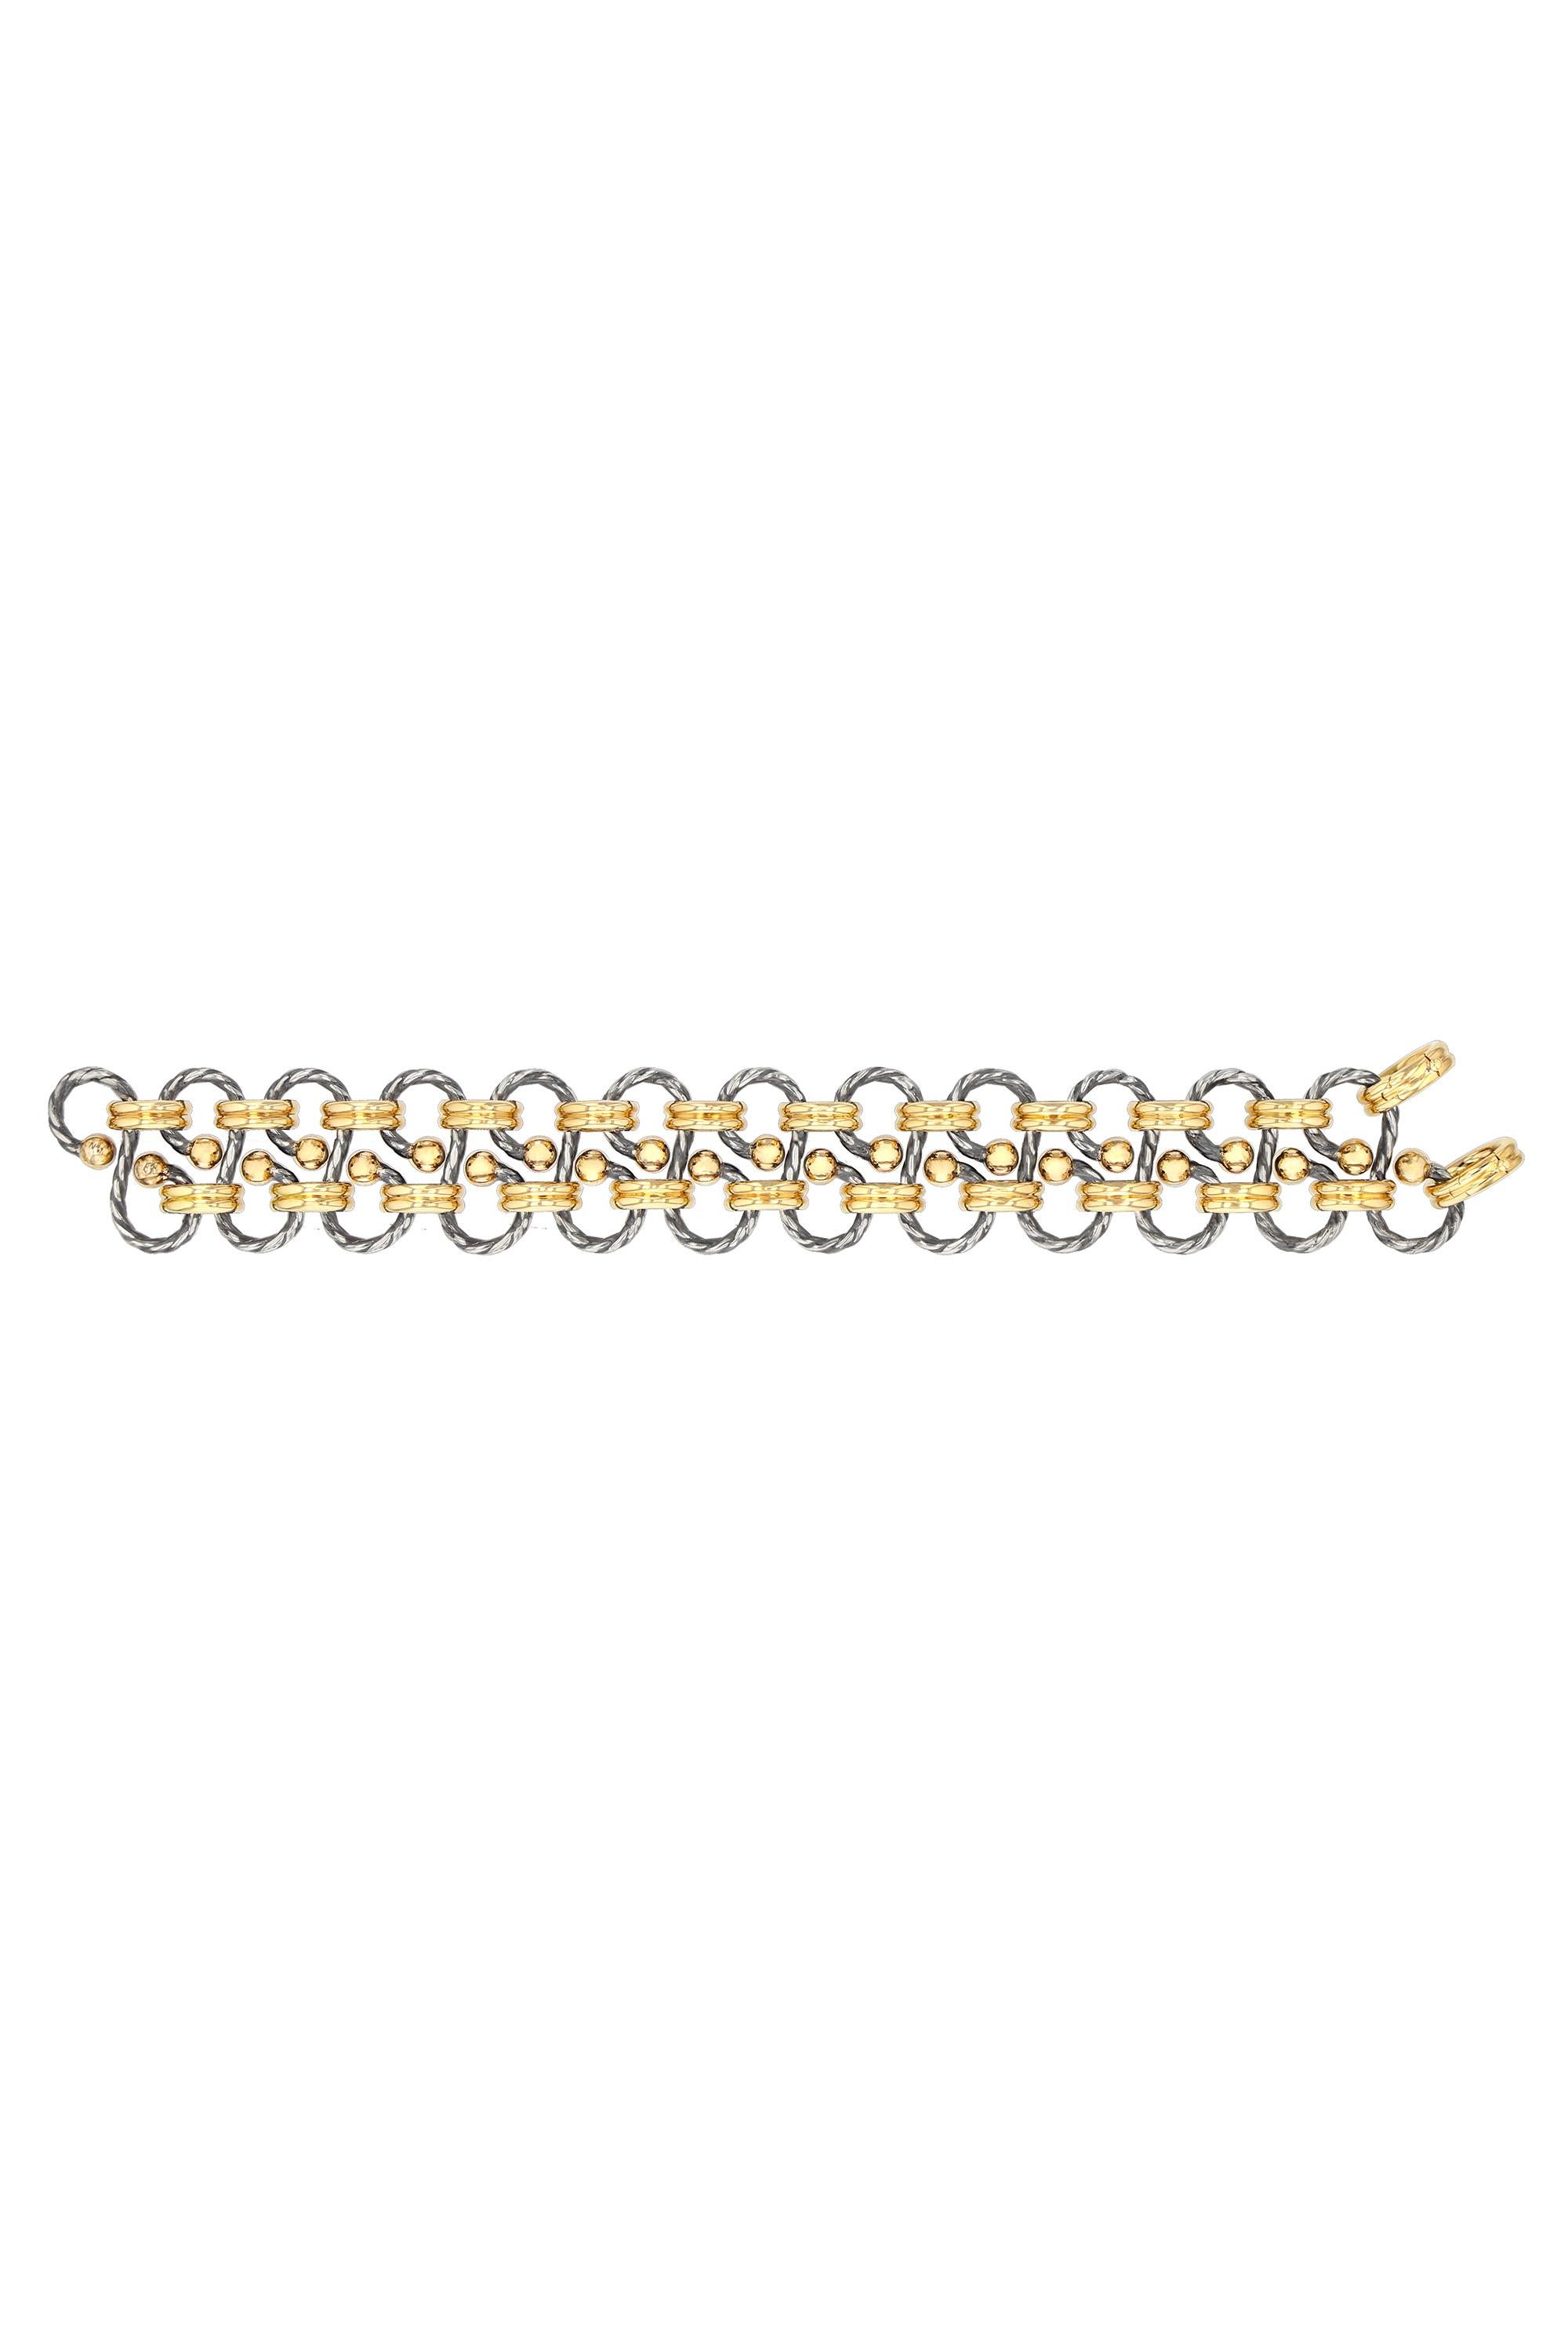 Neoclassical Diamond & Gold Twist Bracelet Medium Size by Elie Top For Sale